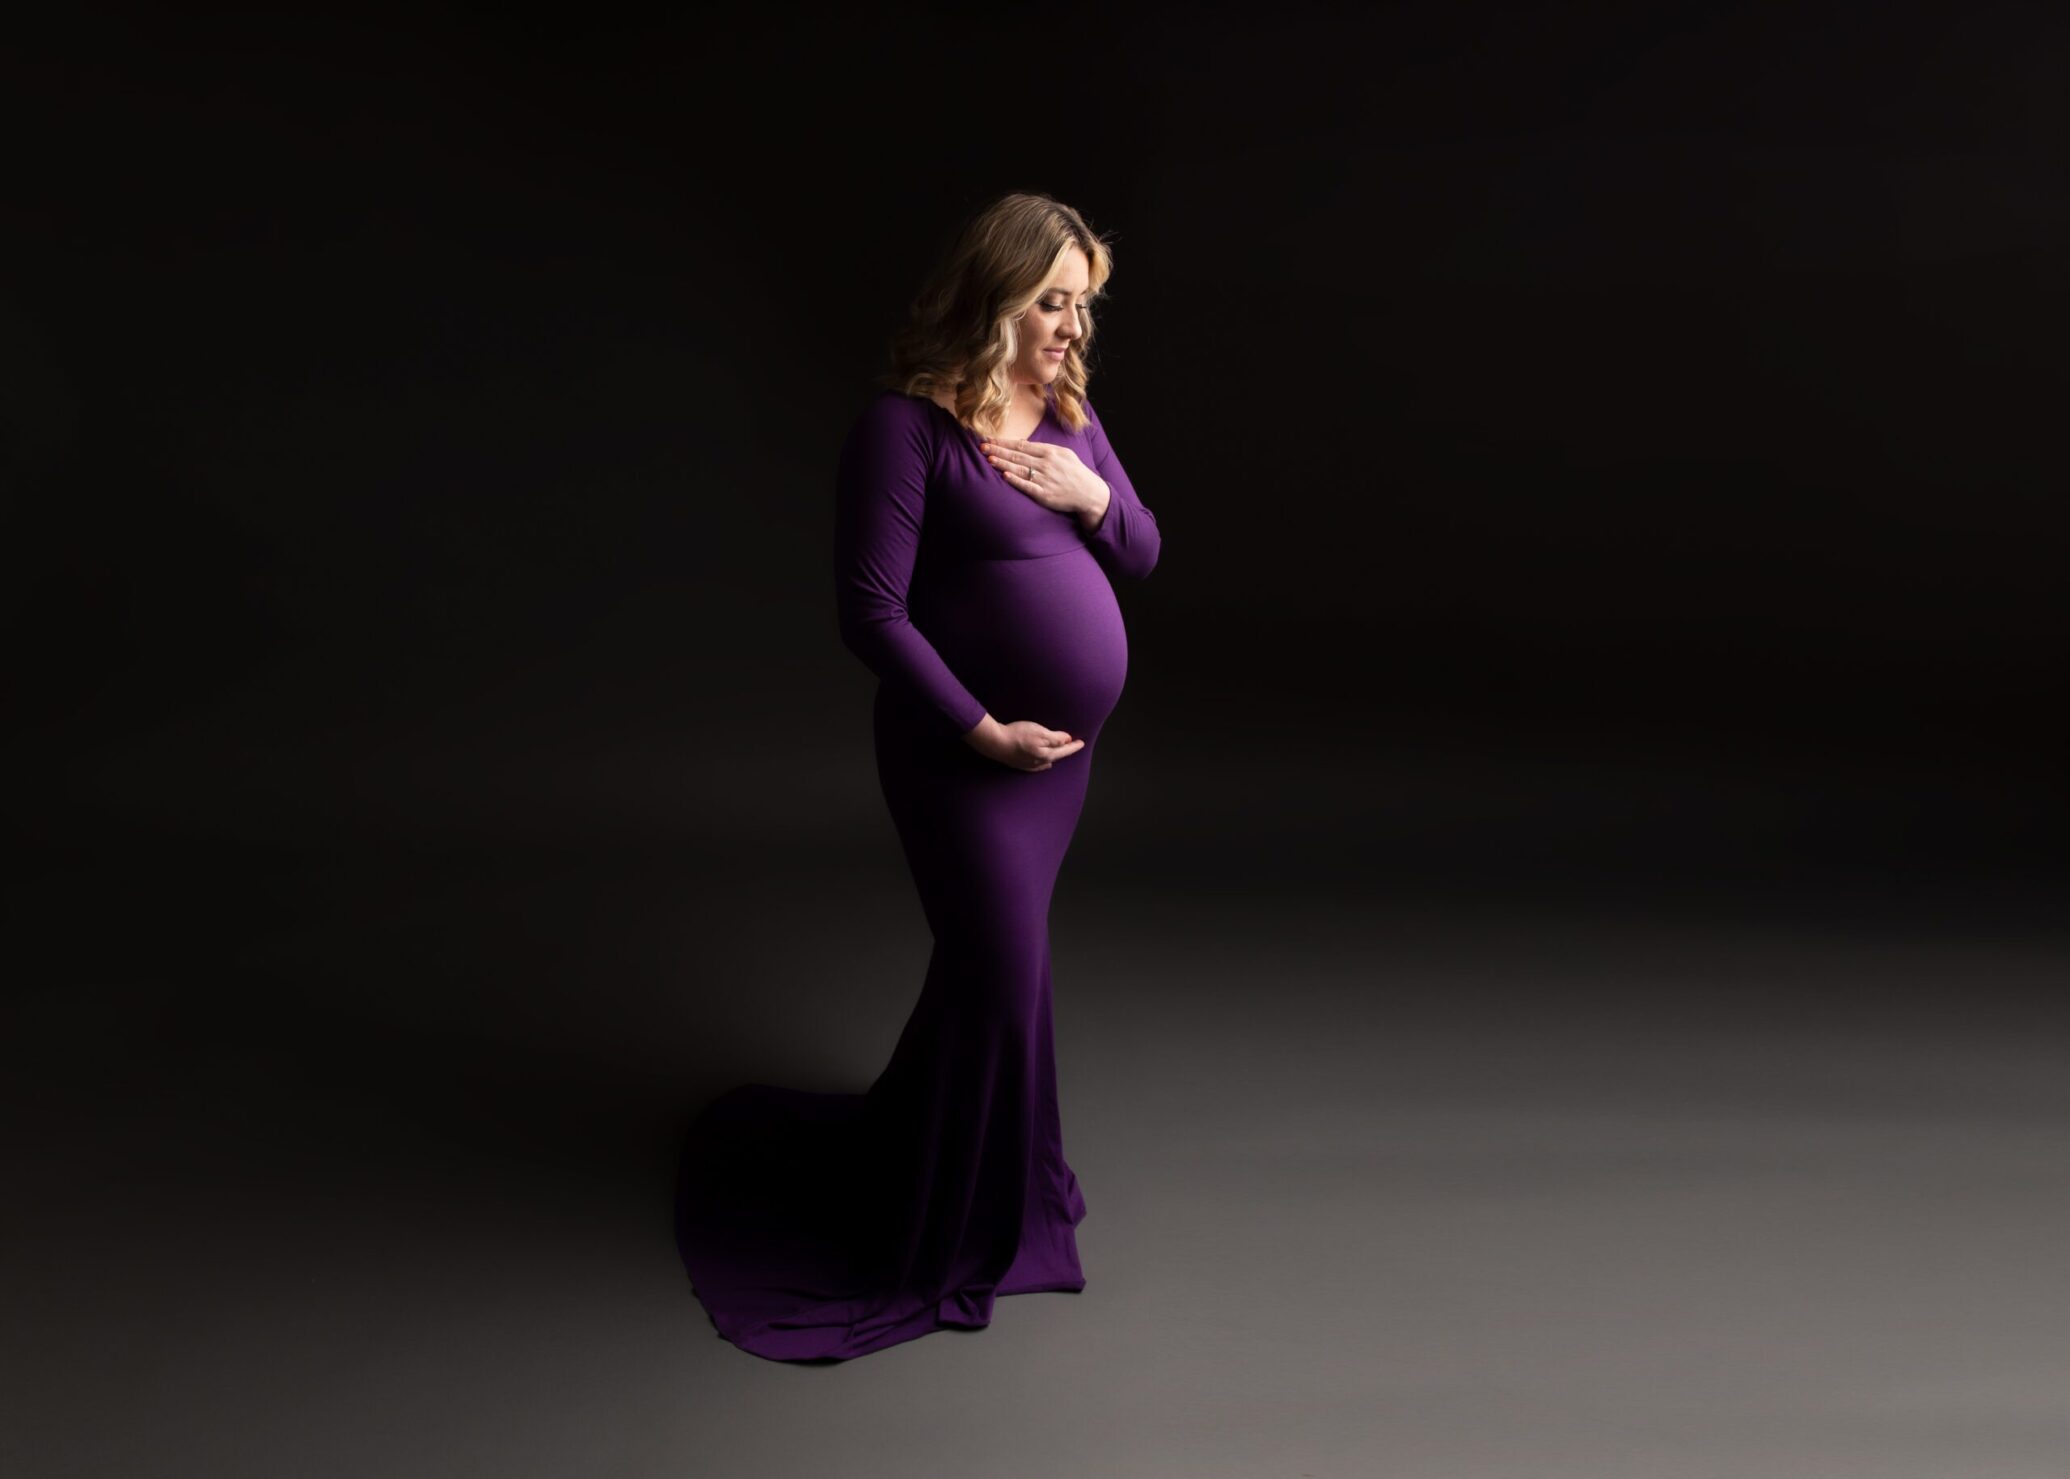 mom in purple dress that is part of her utah maternity package